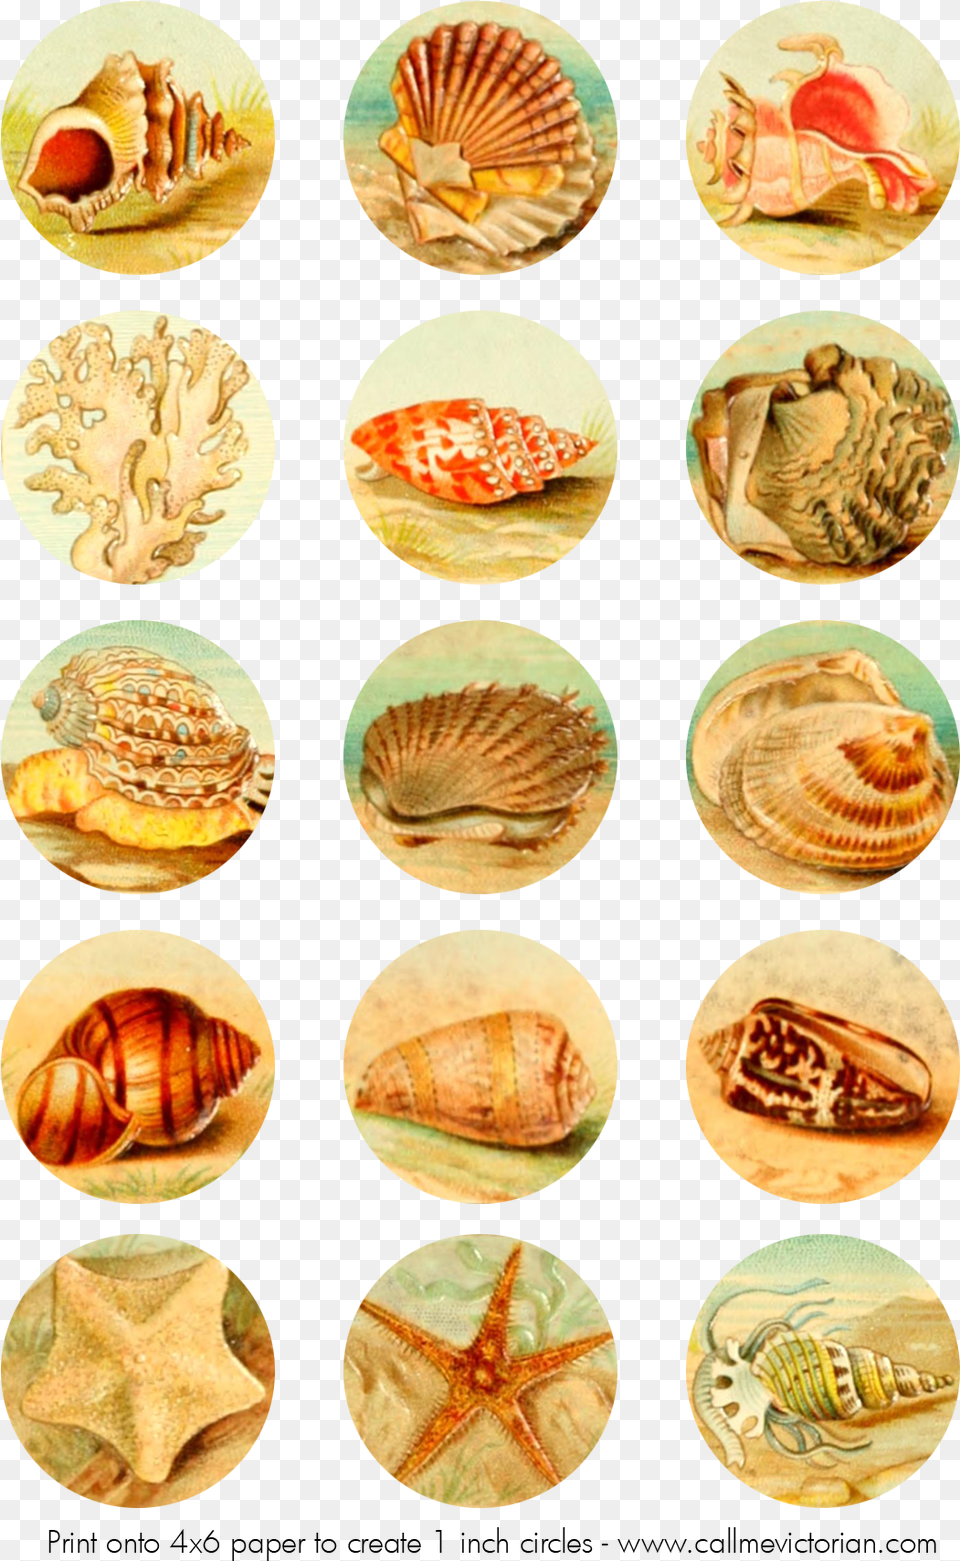 Seashells Digital Collage Sheet Digital Collage Sheets, Animal, Sea Life, Invertebrate, Seashell Free Transparent Png